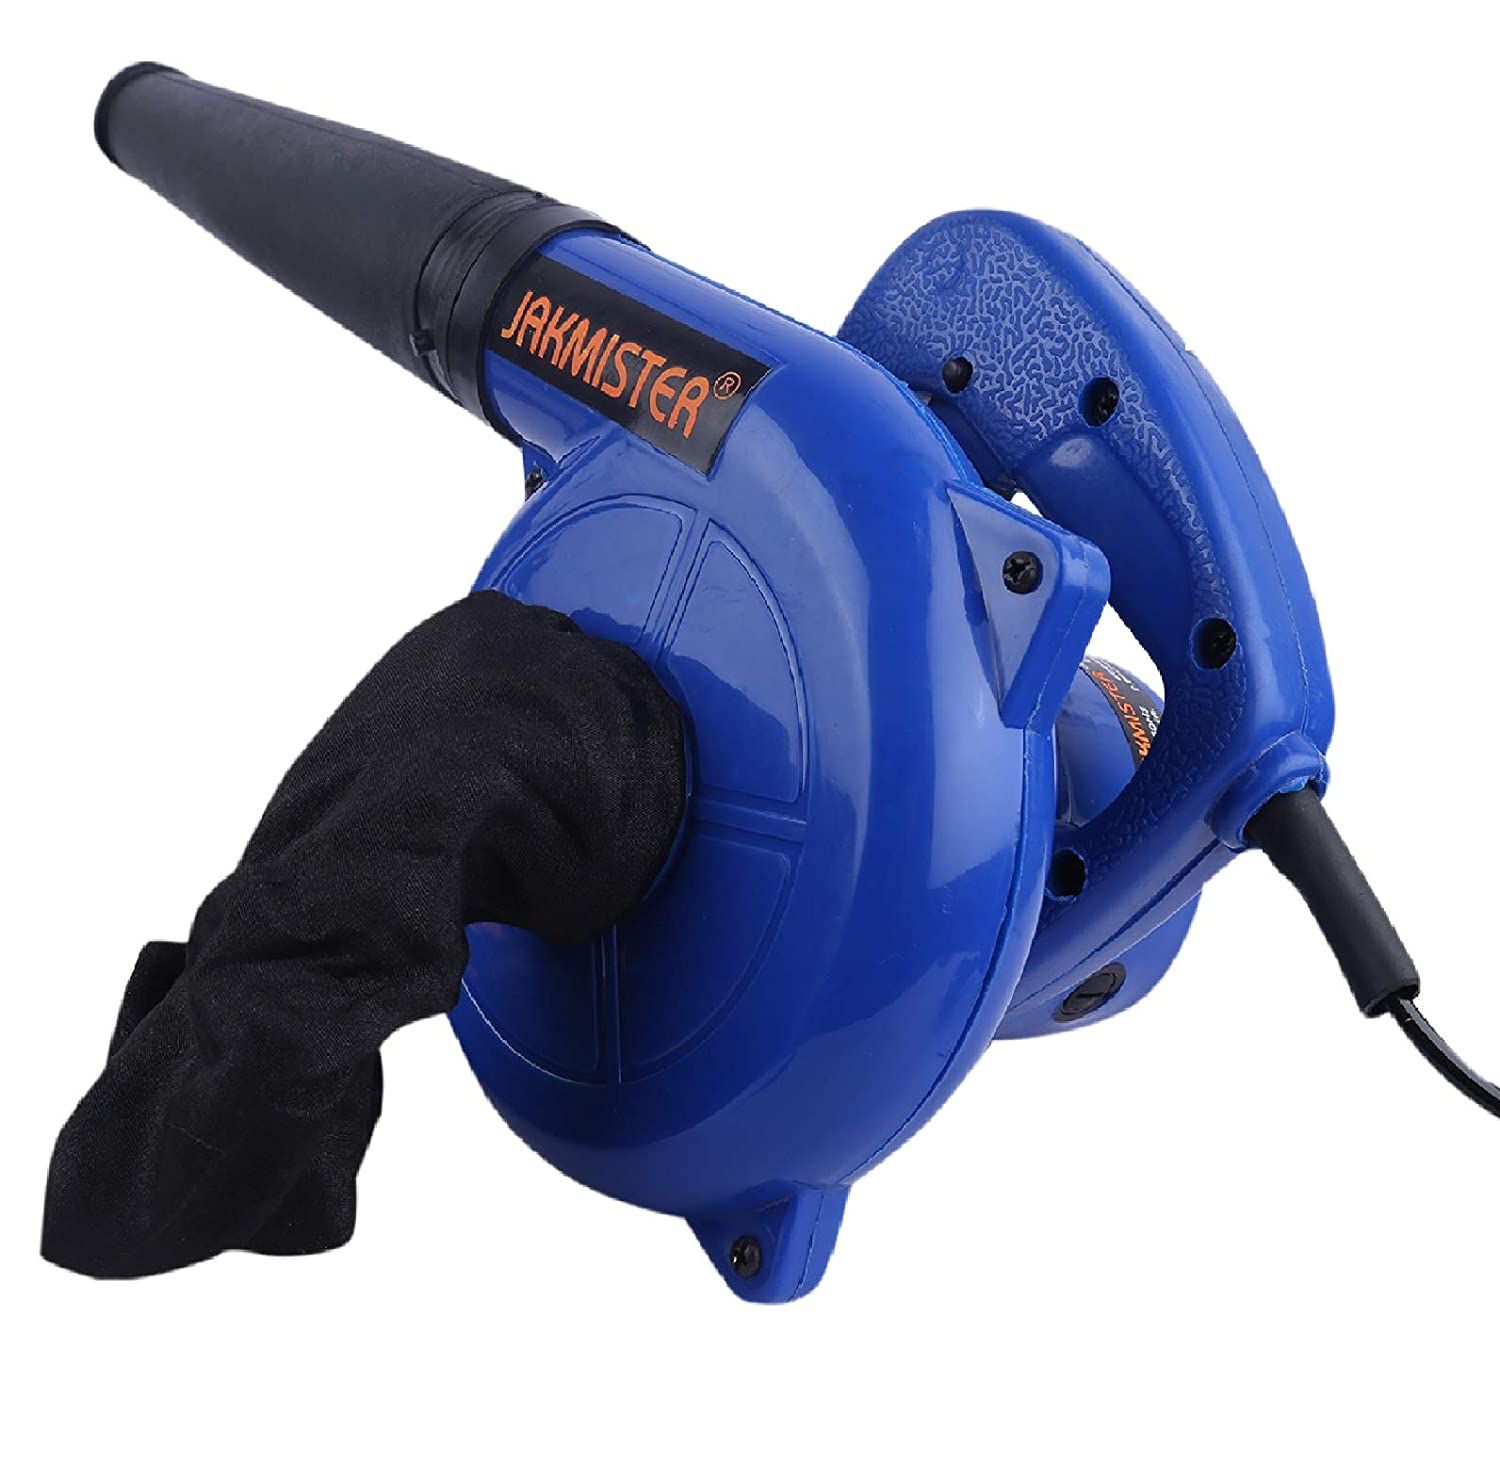     			JAKMISTER 600 W 80 Miles/Hour Electric Air Blower Dust PC Cleaner (15000 RPM, Blue)